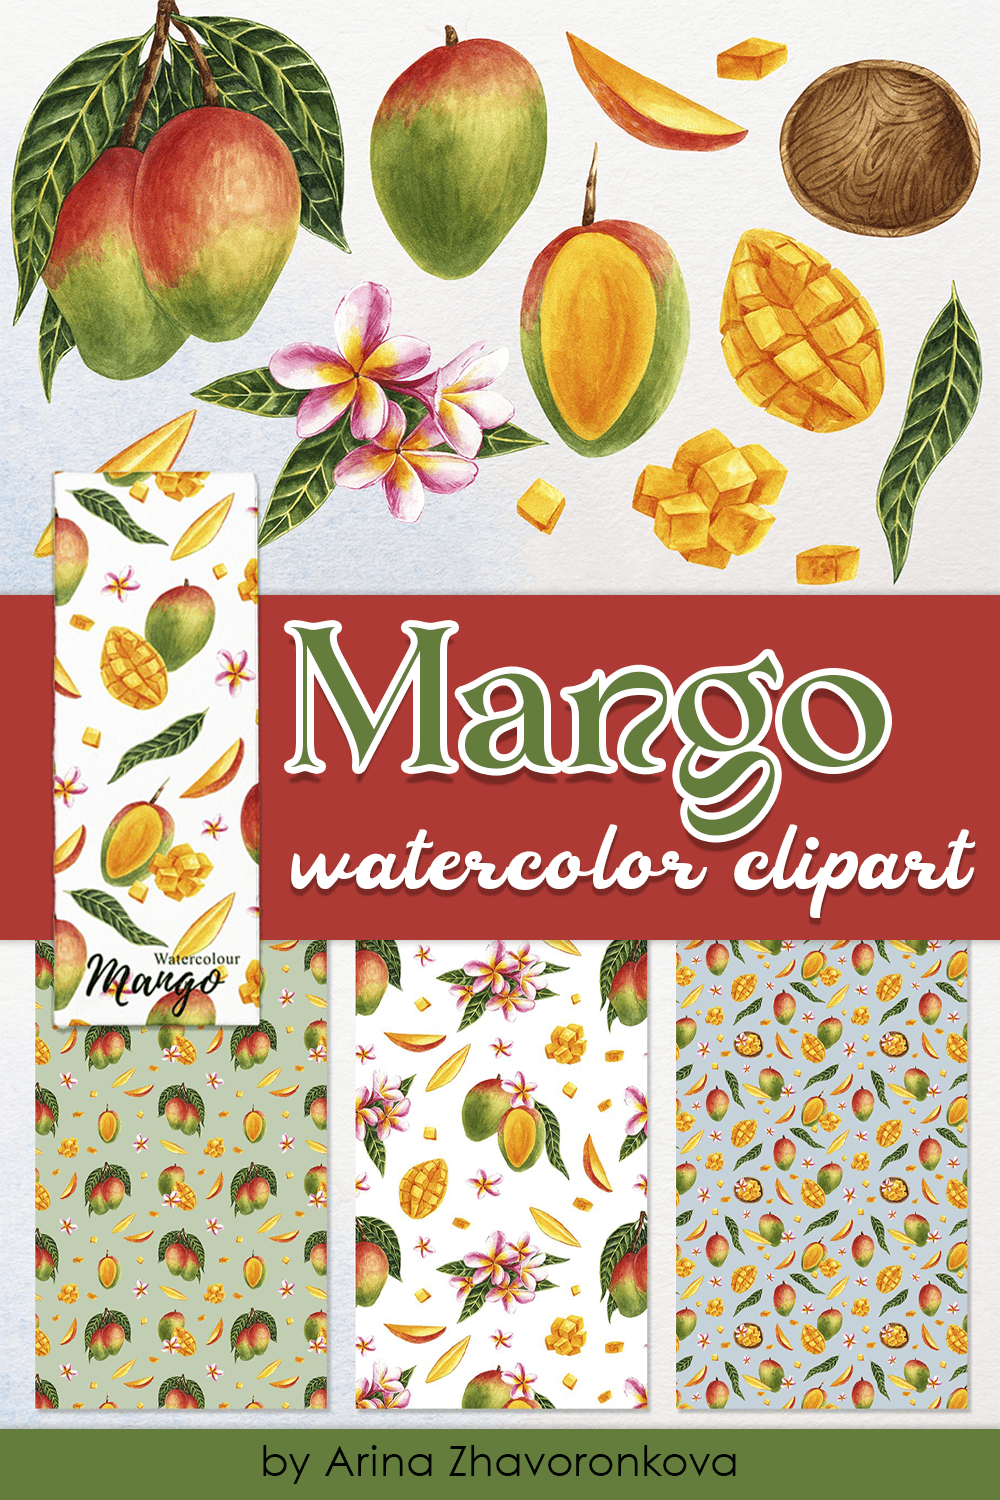 Mango watercolor clipart - pinterest image preview.